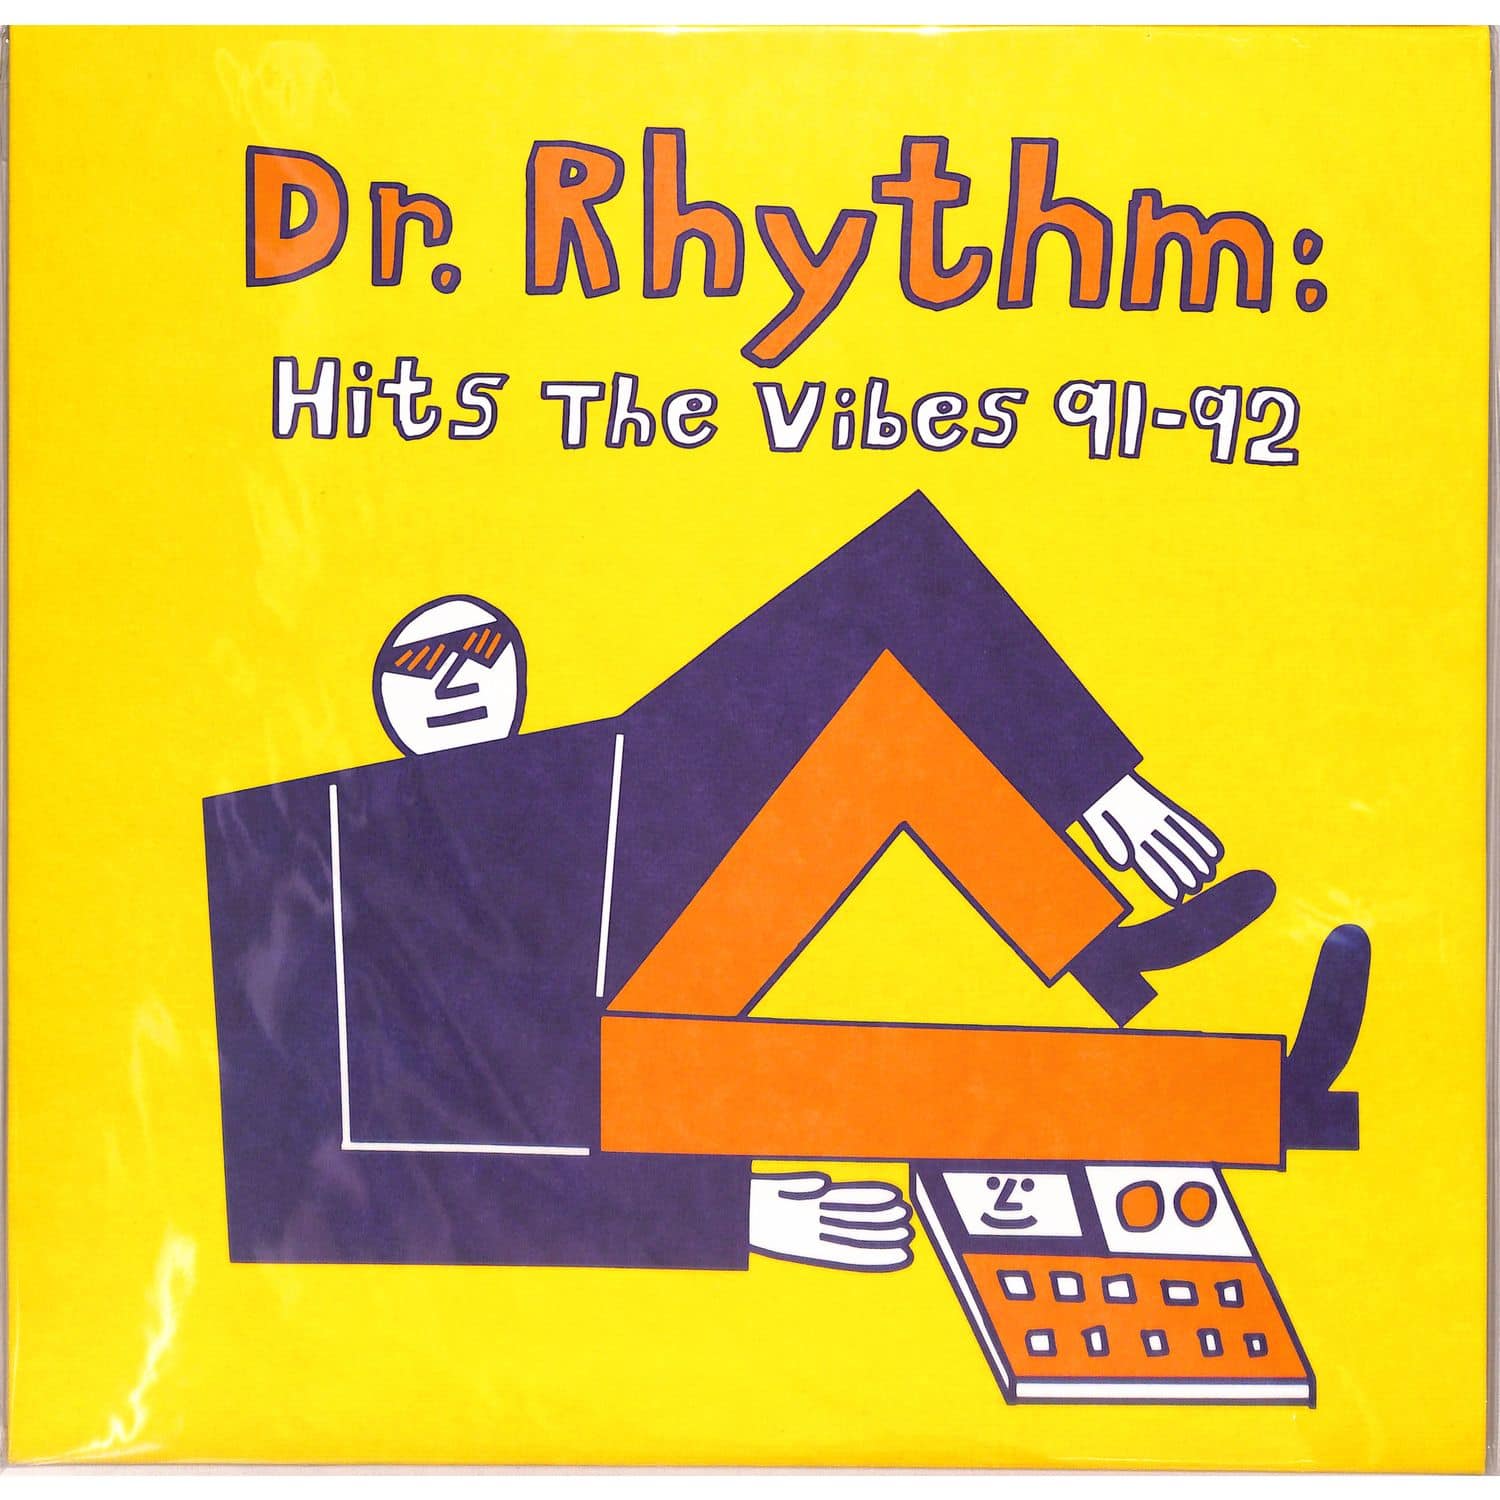 Dr. Rhythm - HITS THE VIBES 91-92